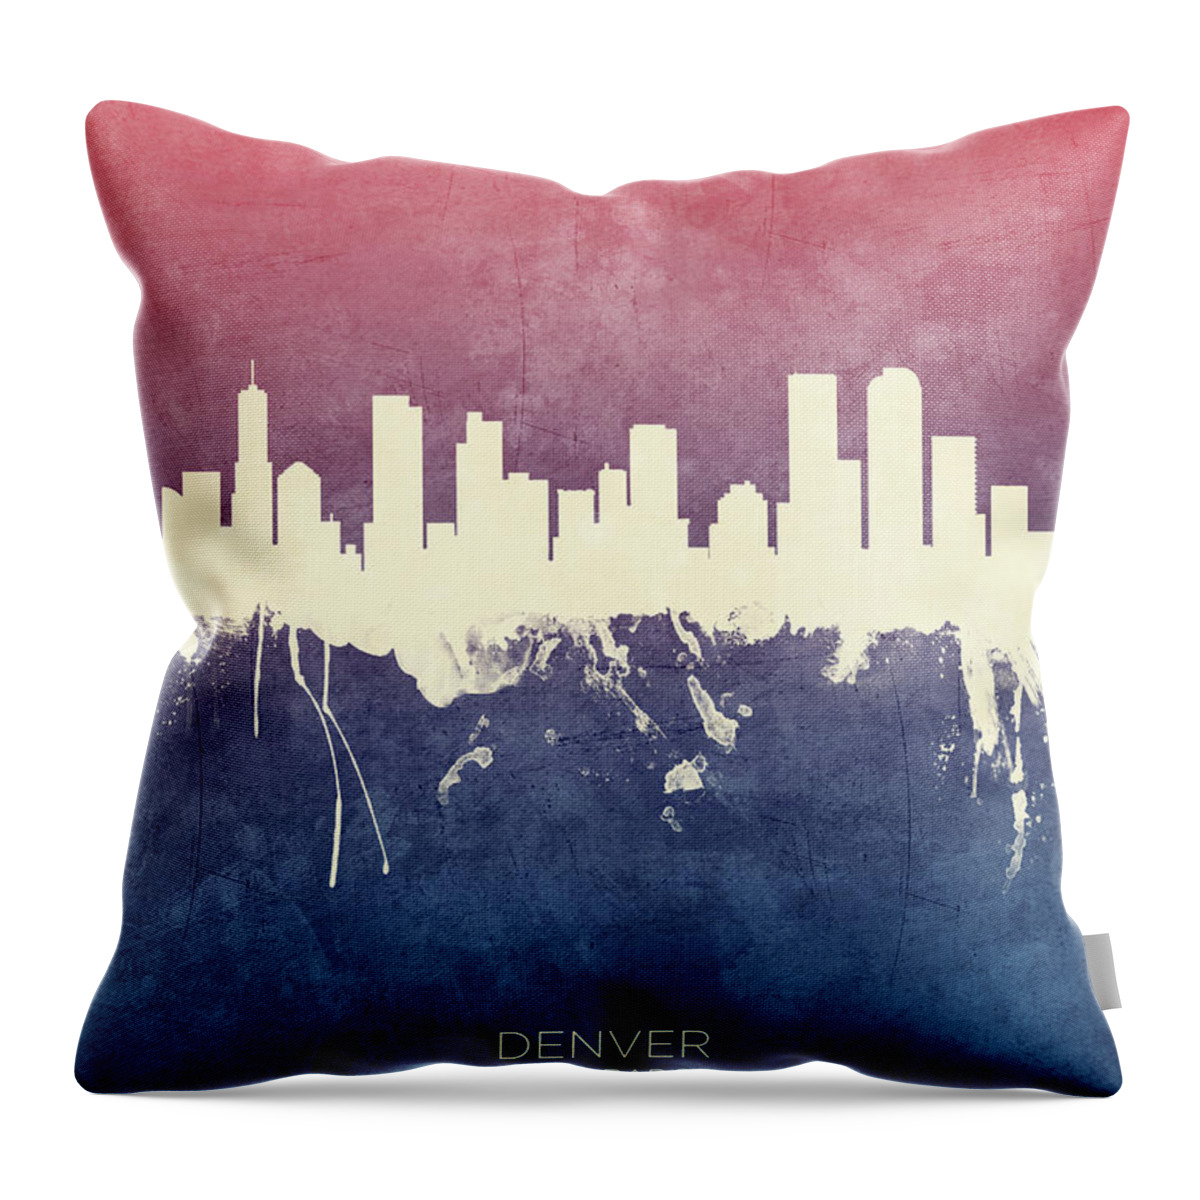 Denver Throw Pillow featuring the digital art Denver Colorado Skyline by Michael Tompsett